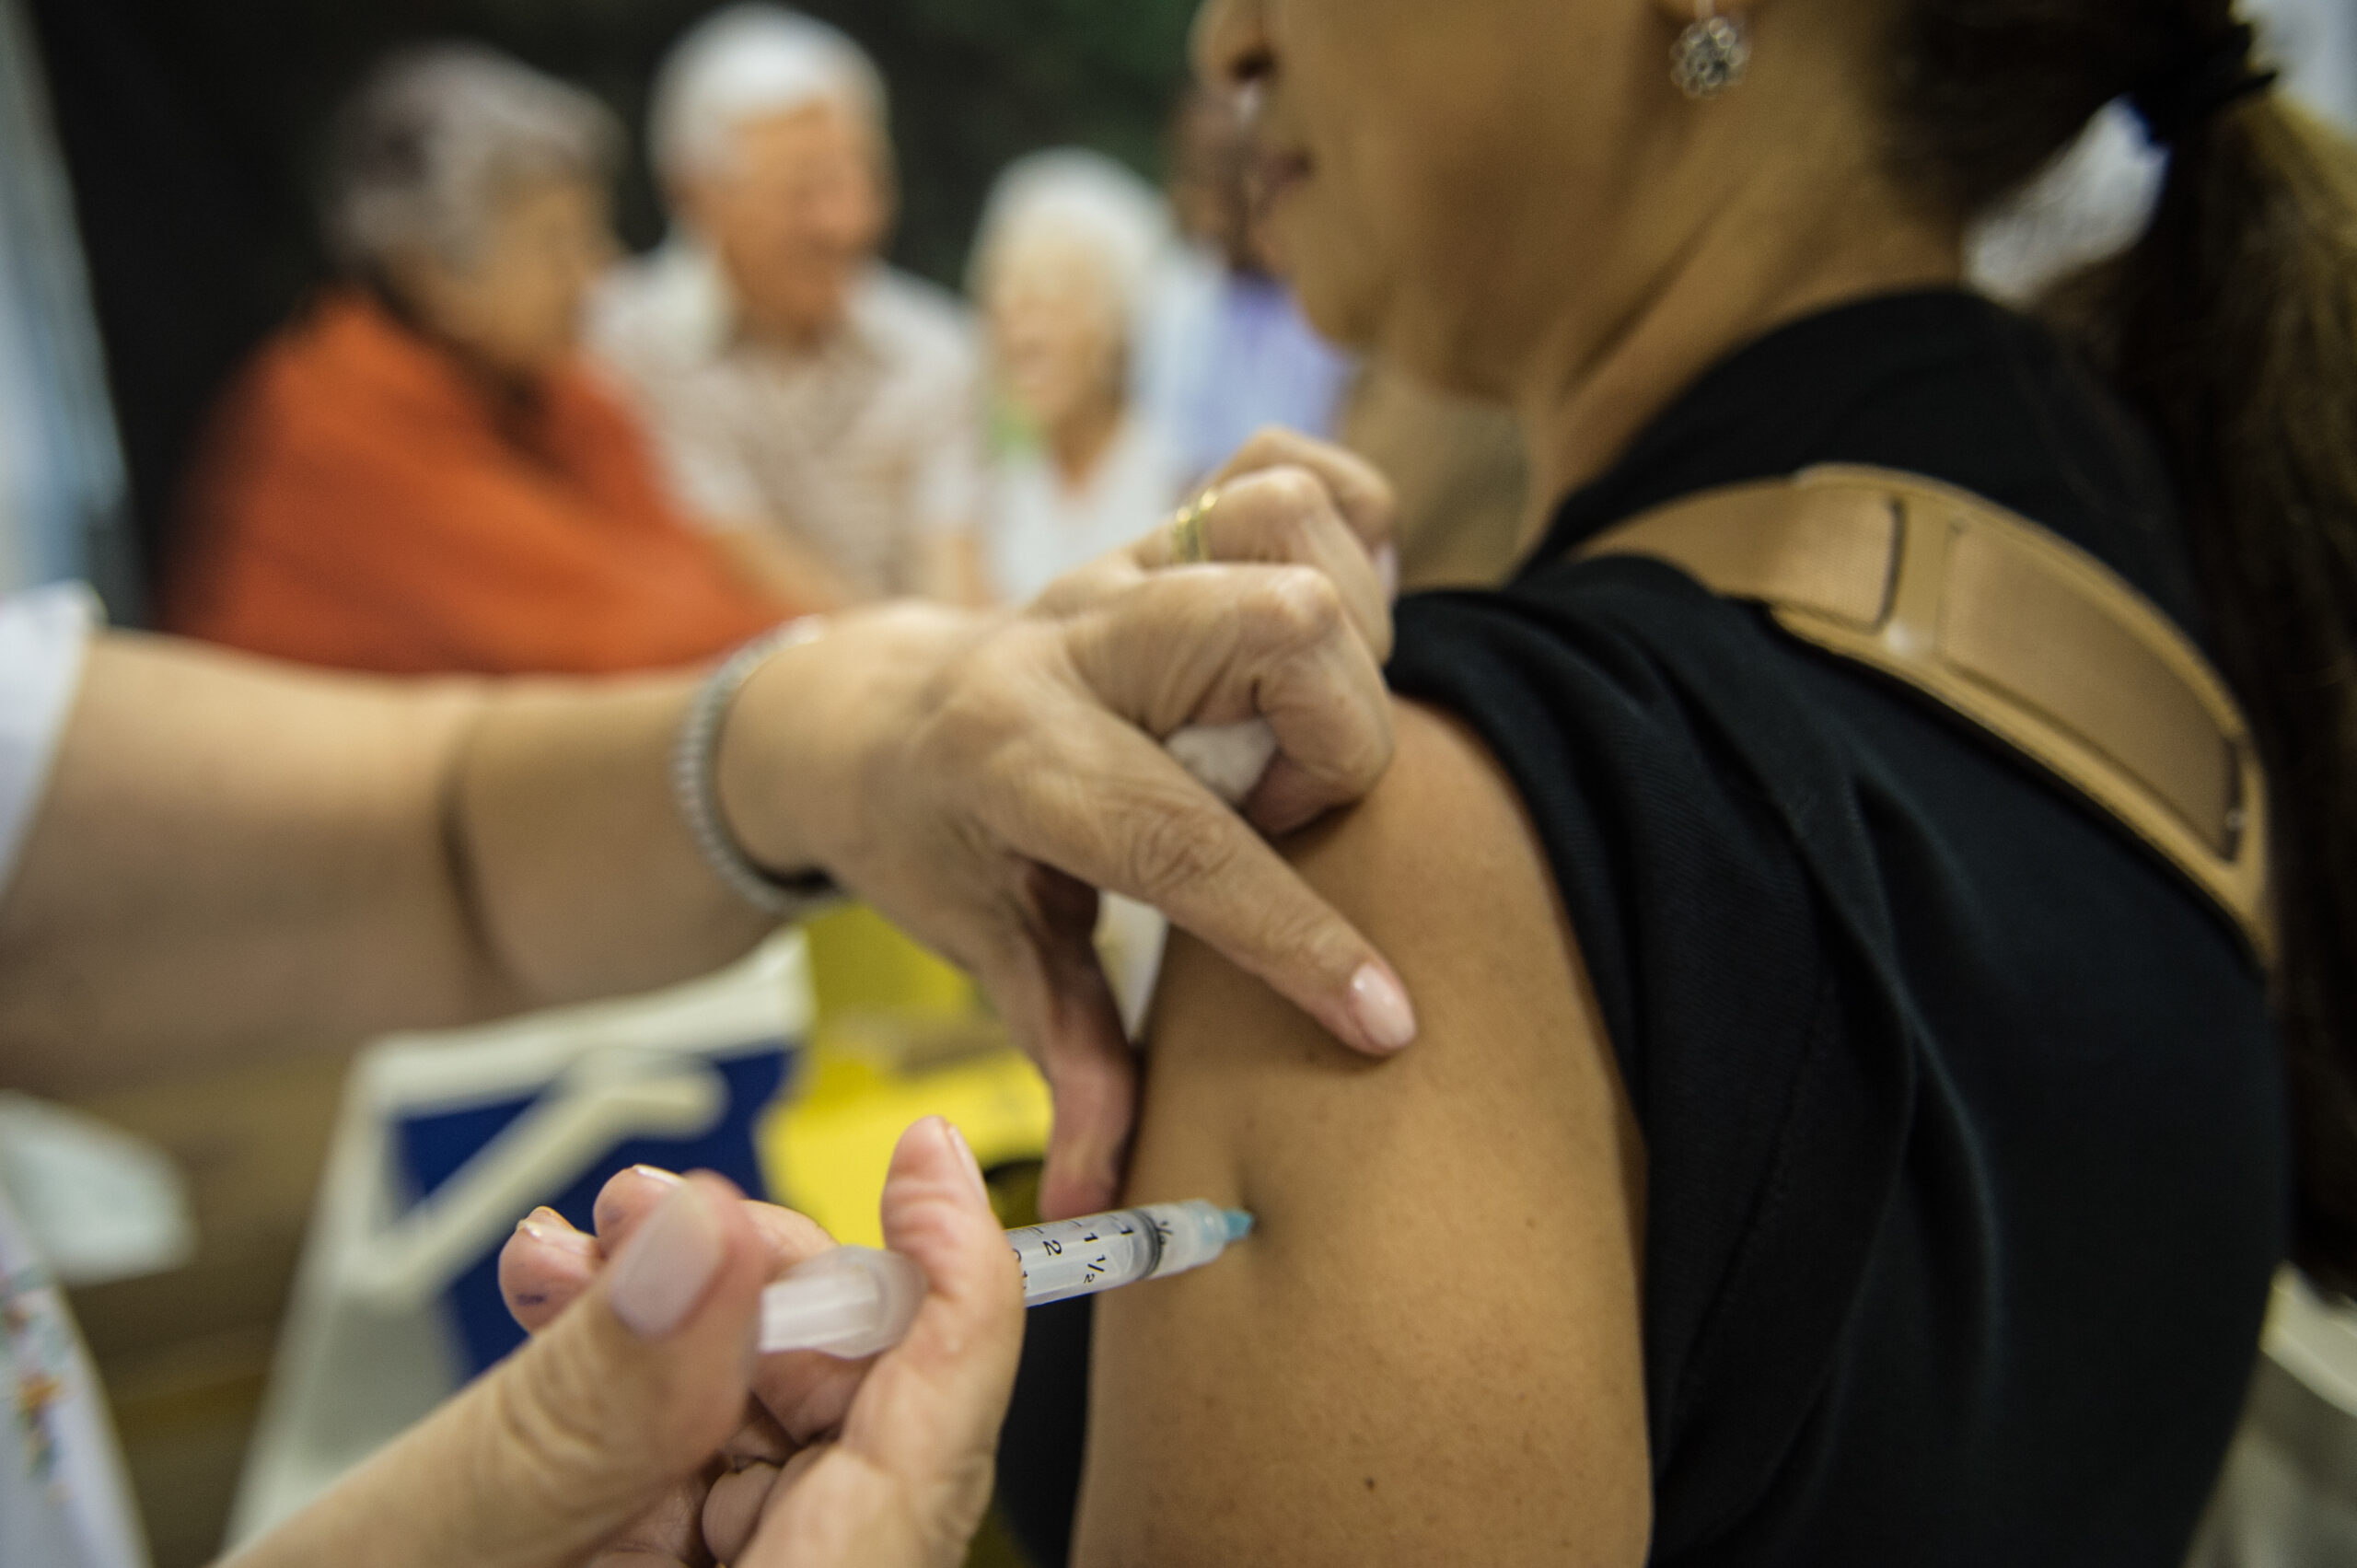 PT apresenta projeto para garantir vacinas contra Covid-19